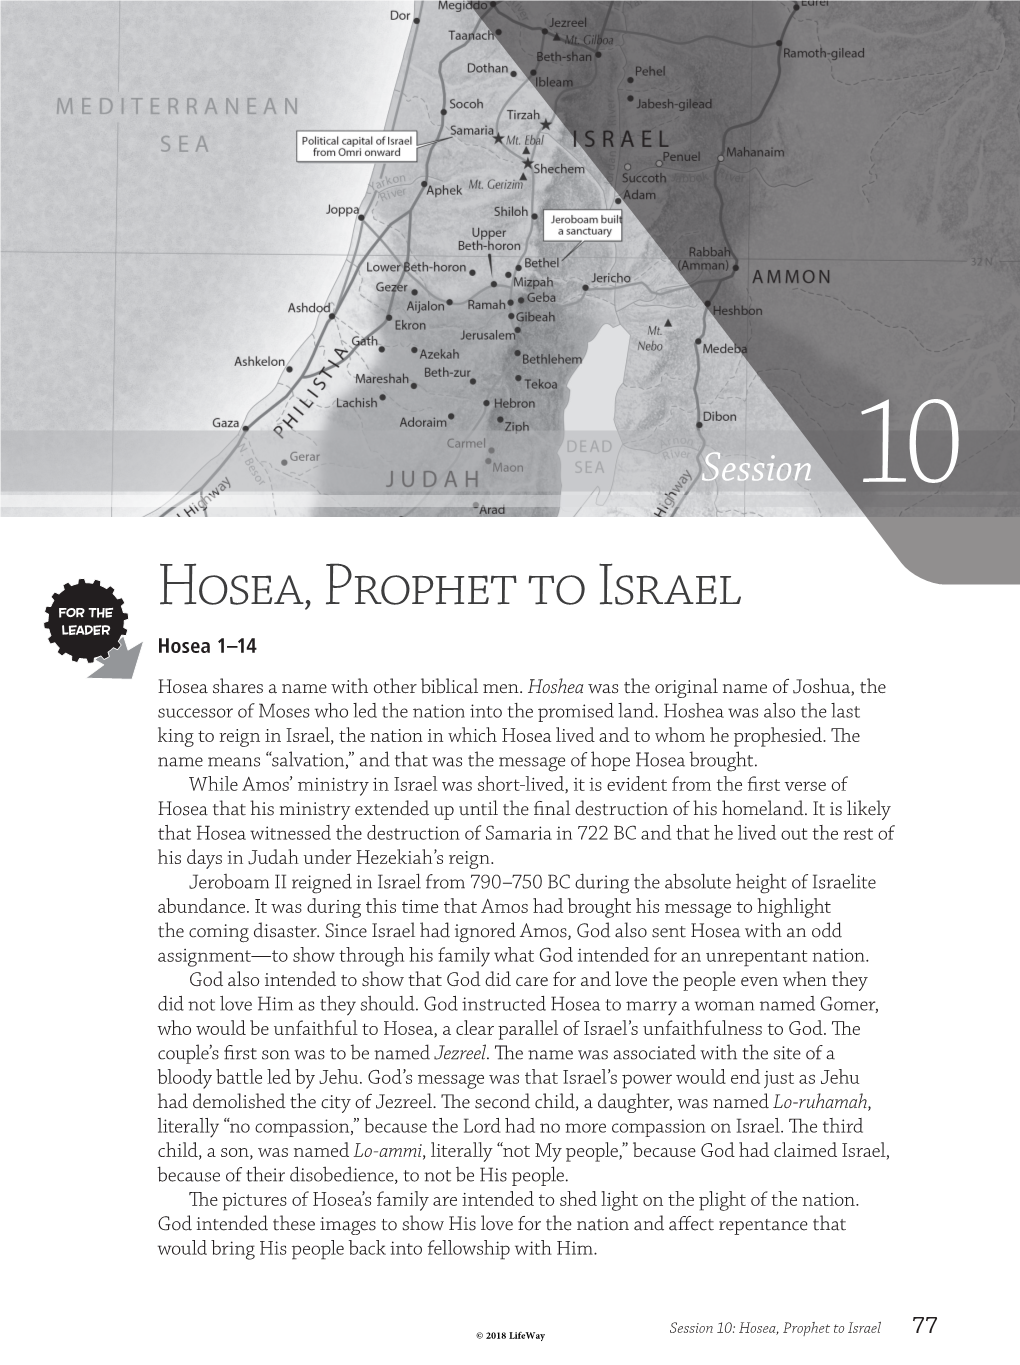 Hosea, Prophet to Israel